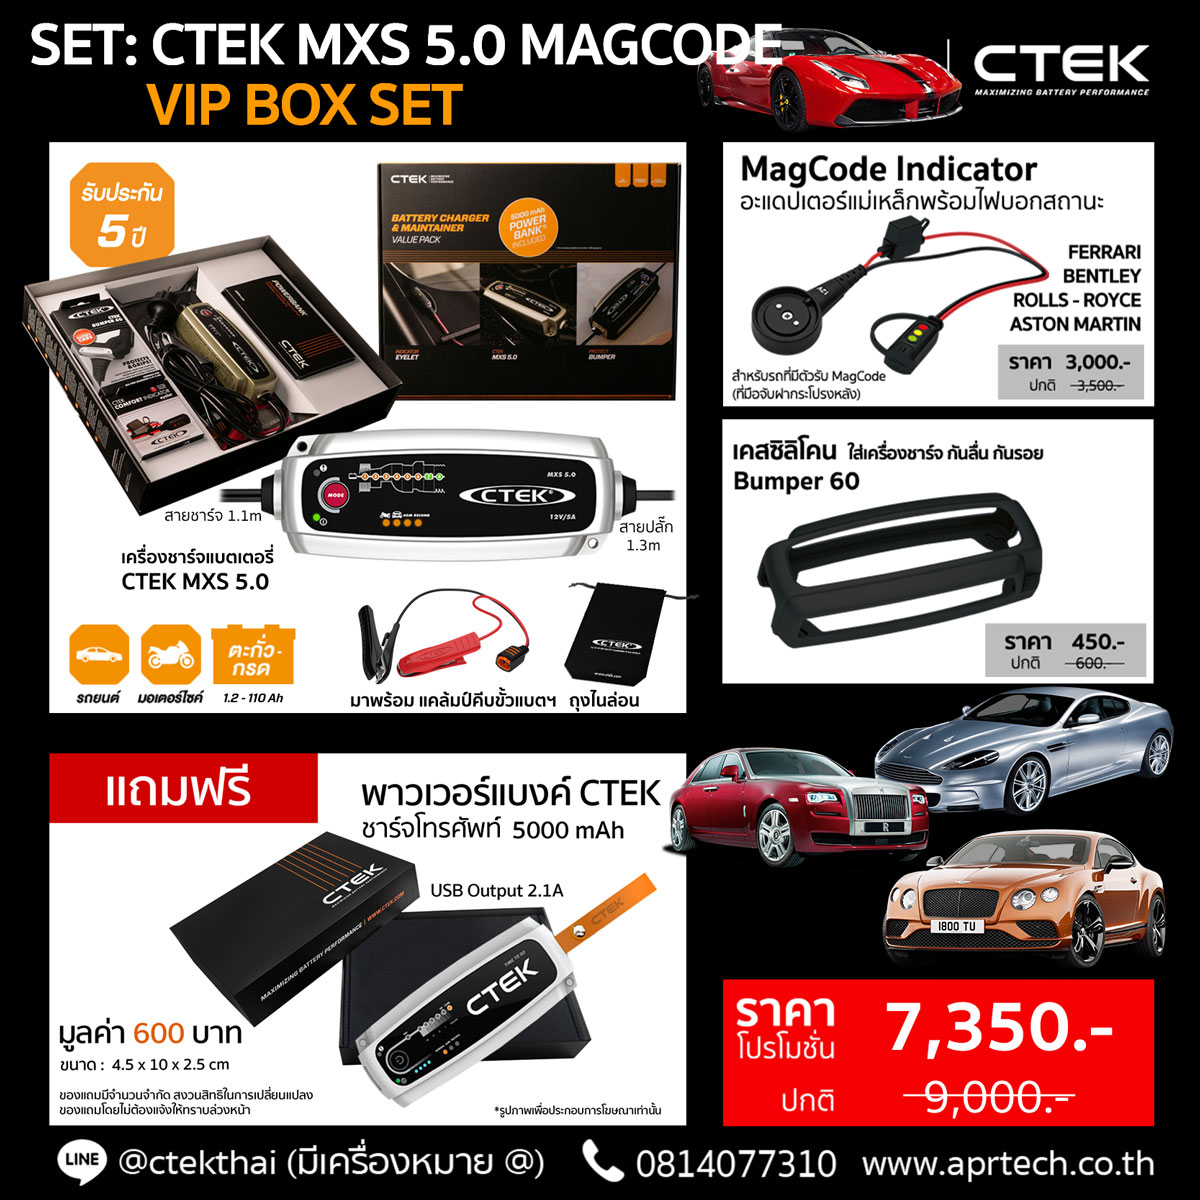 SET CTEK MXS 5.0 MagCode VIP BOX SET (CTEK MXS 5.0 + MagCode Indicator + Bumper)